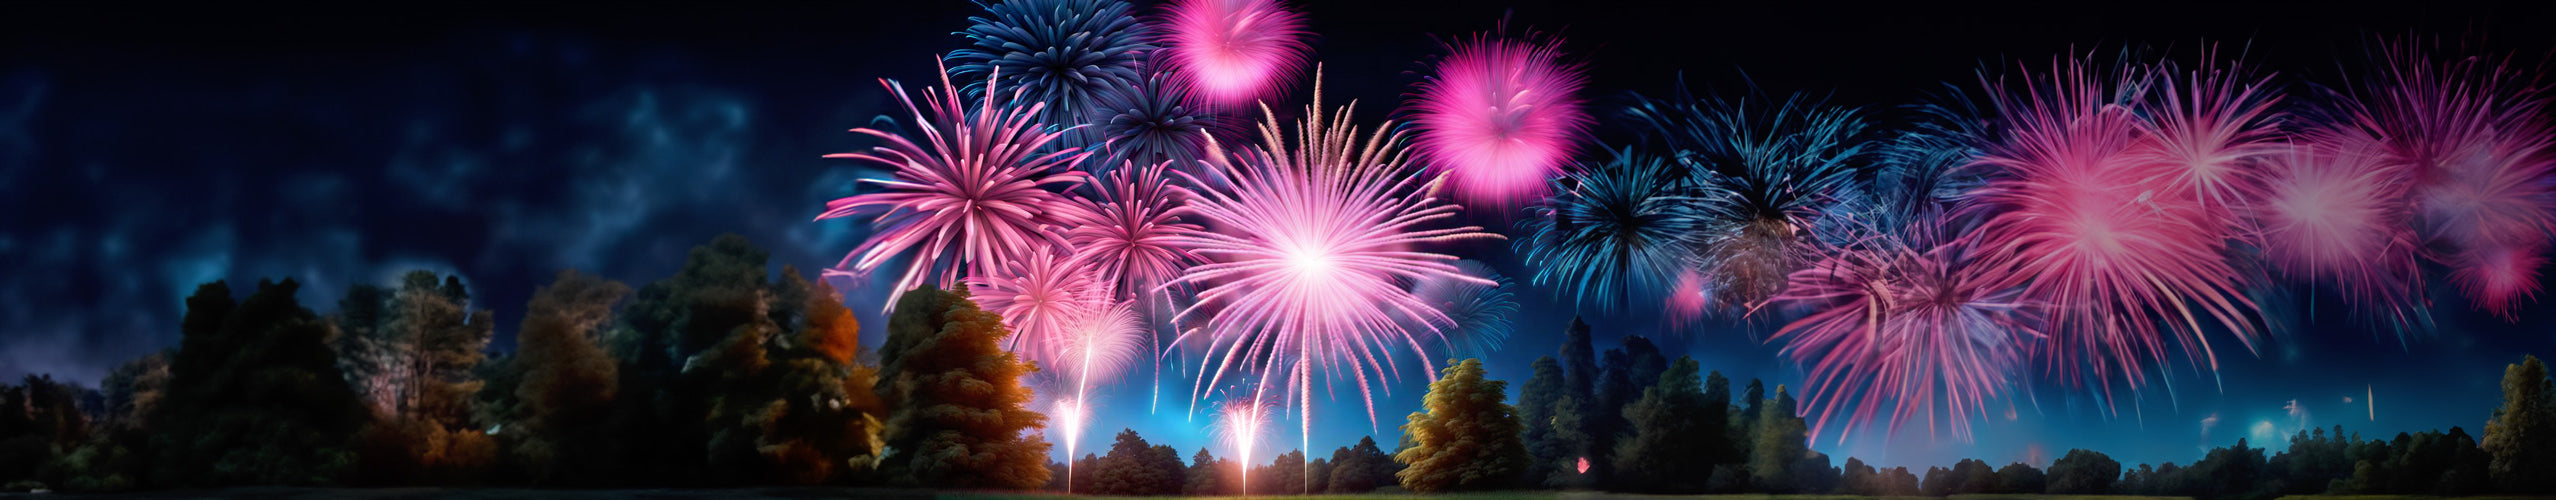 DIY Firework Displays for Gender Reveal Parties — Epic Fireworks